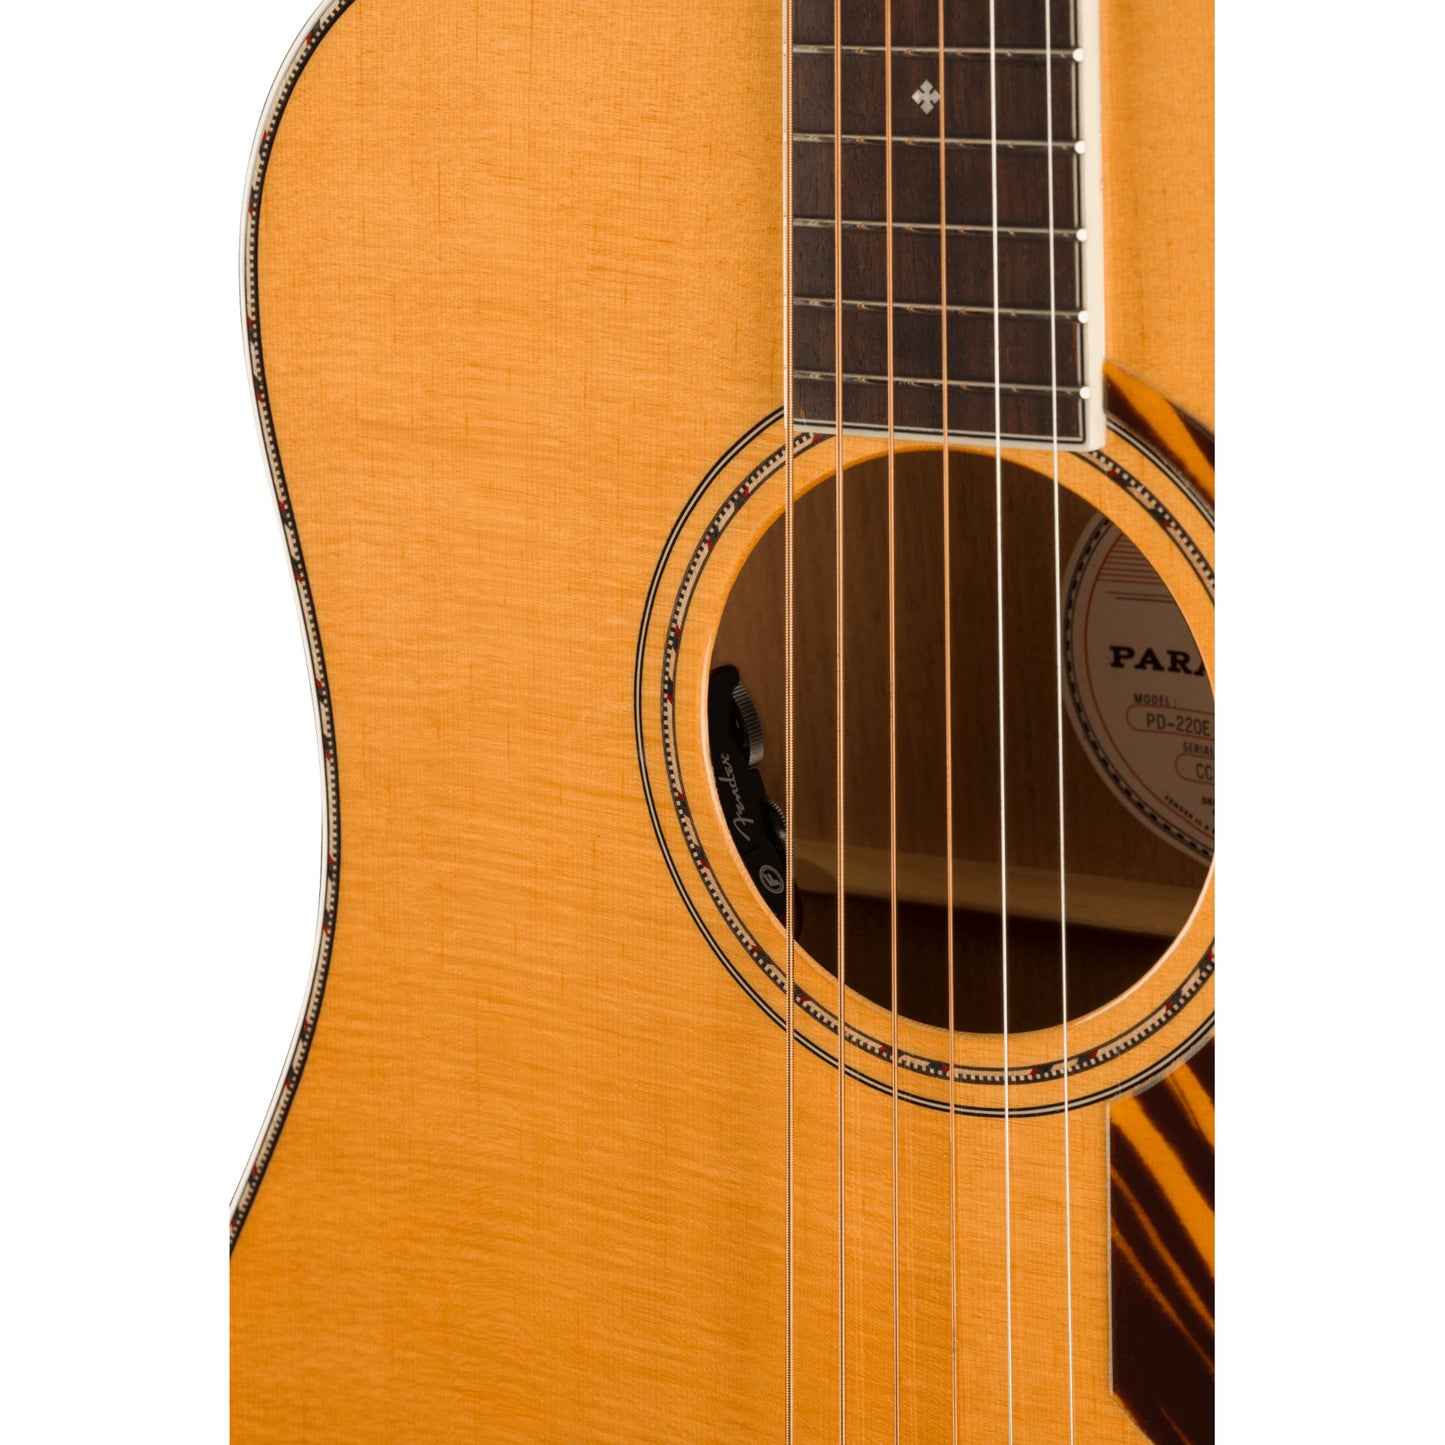 Fender PD-220E Dreadnought Acoustic Guitar - Natural